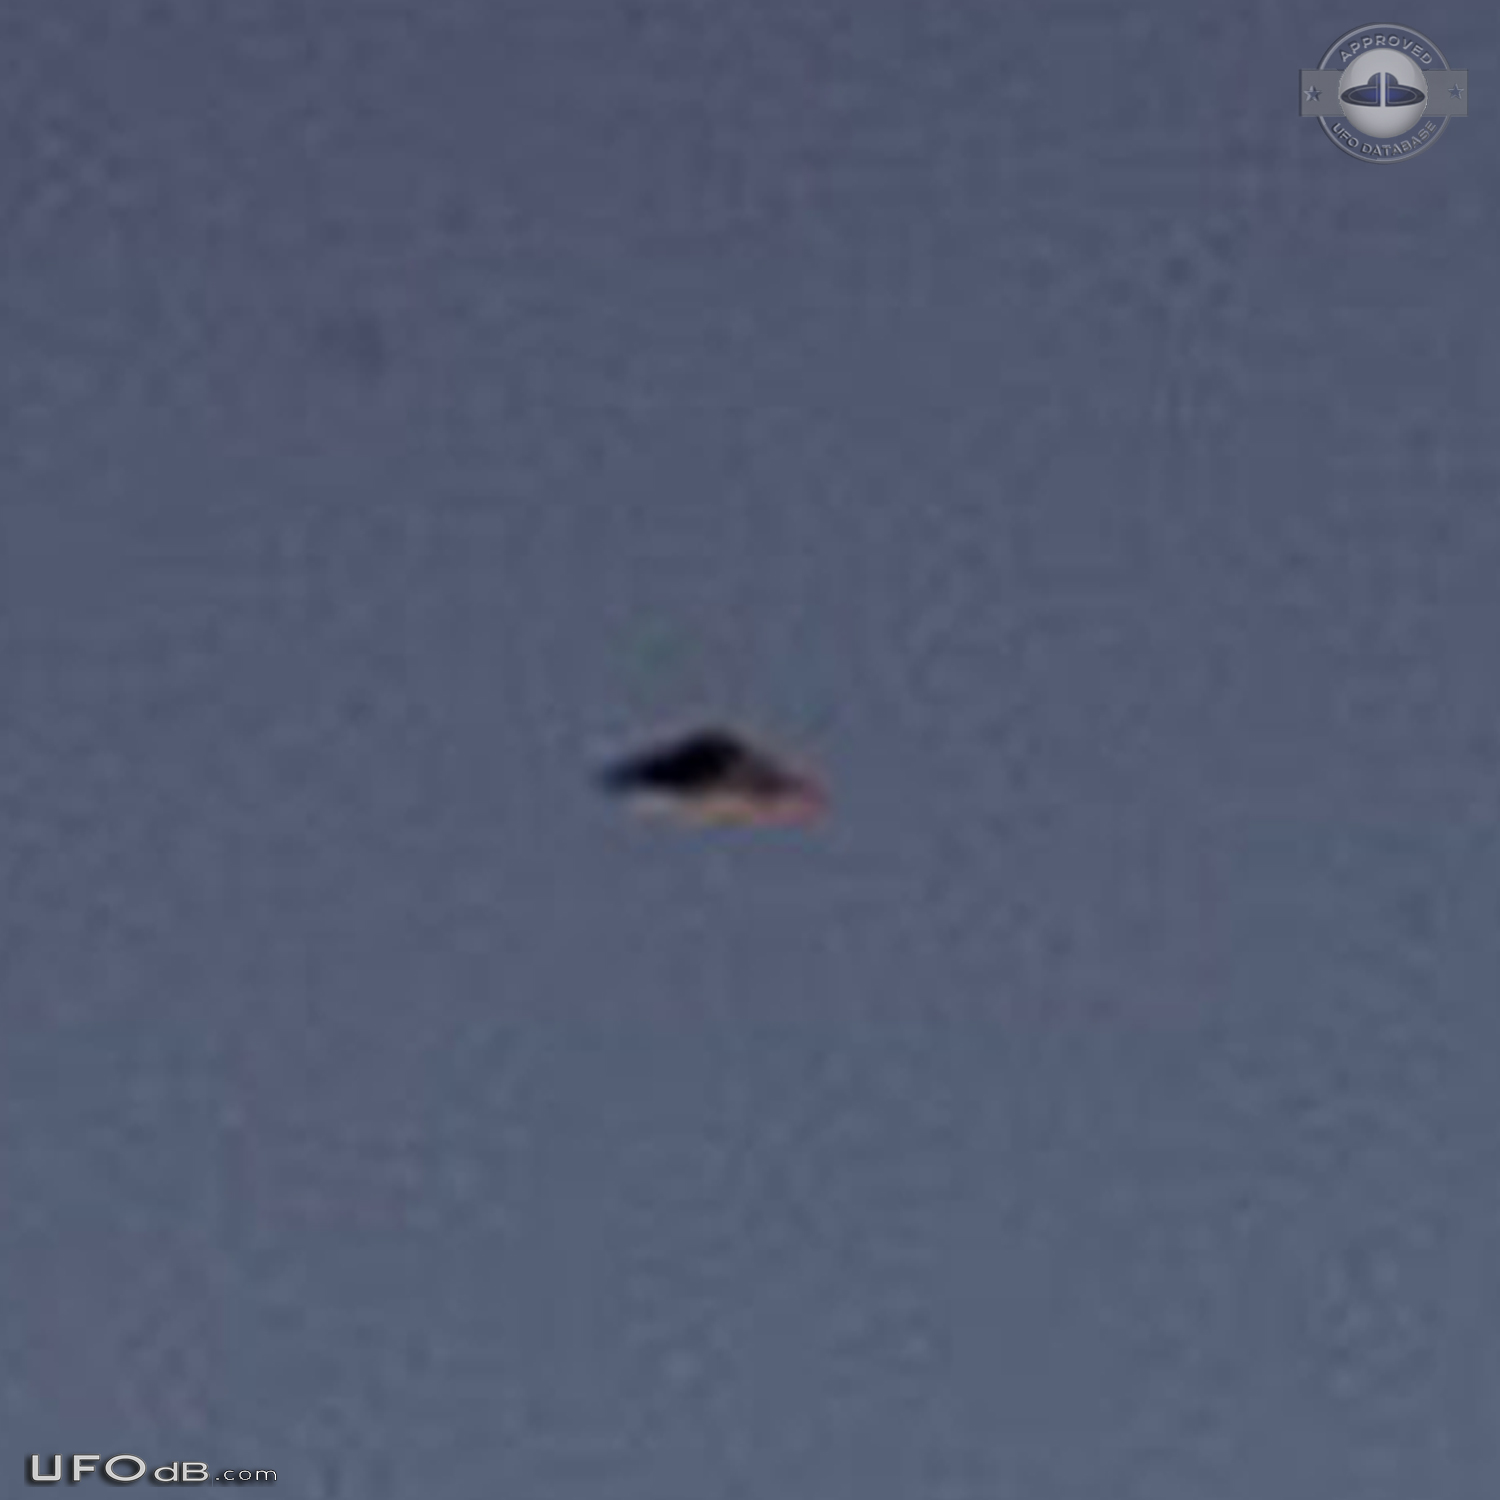 UFO caught on Volcan de Colima Webcam in Mexico - March 2015 UFO Picture #665-3